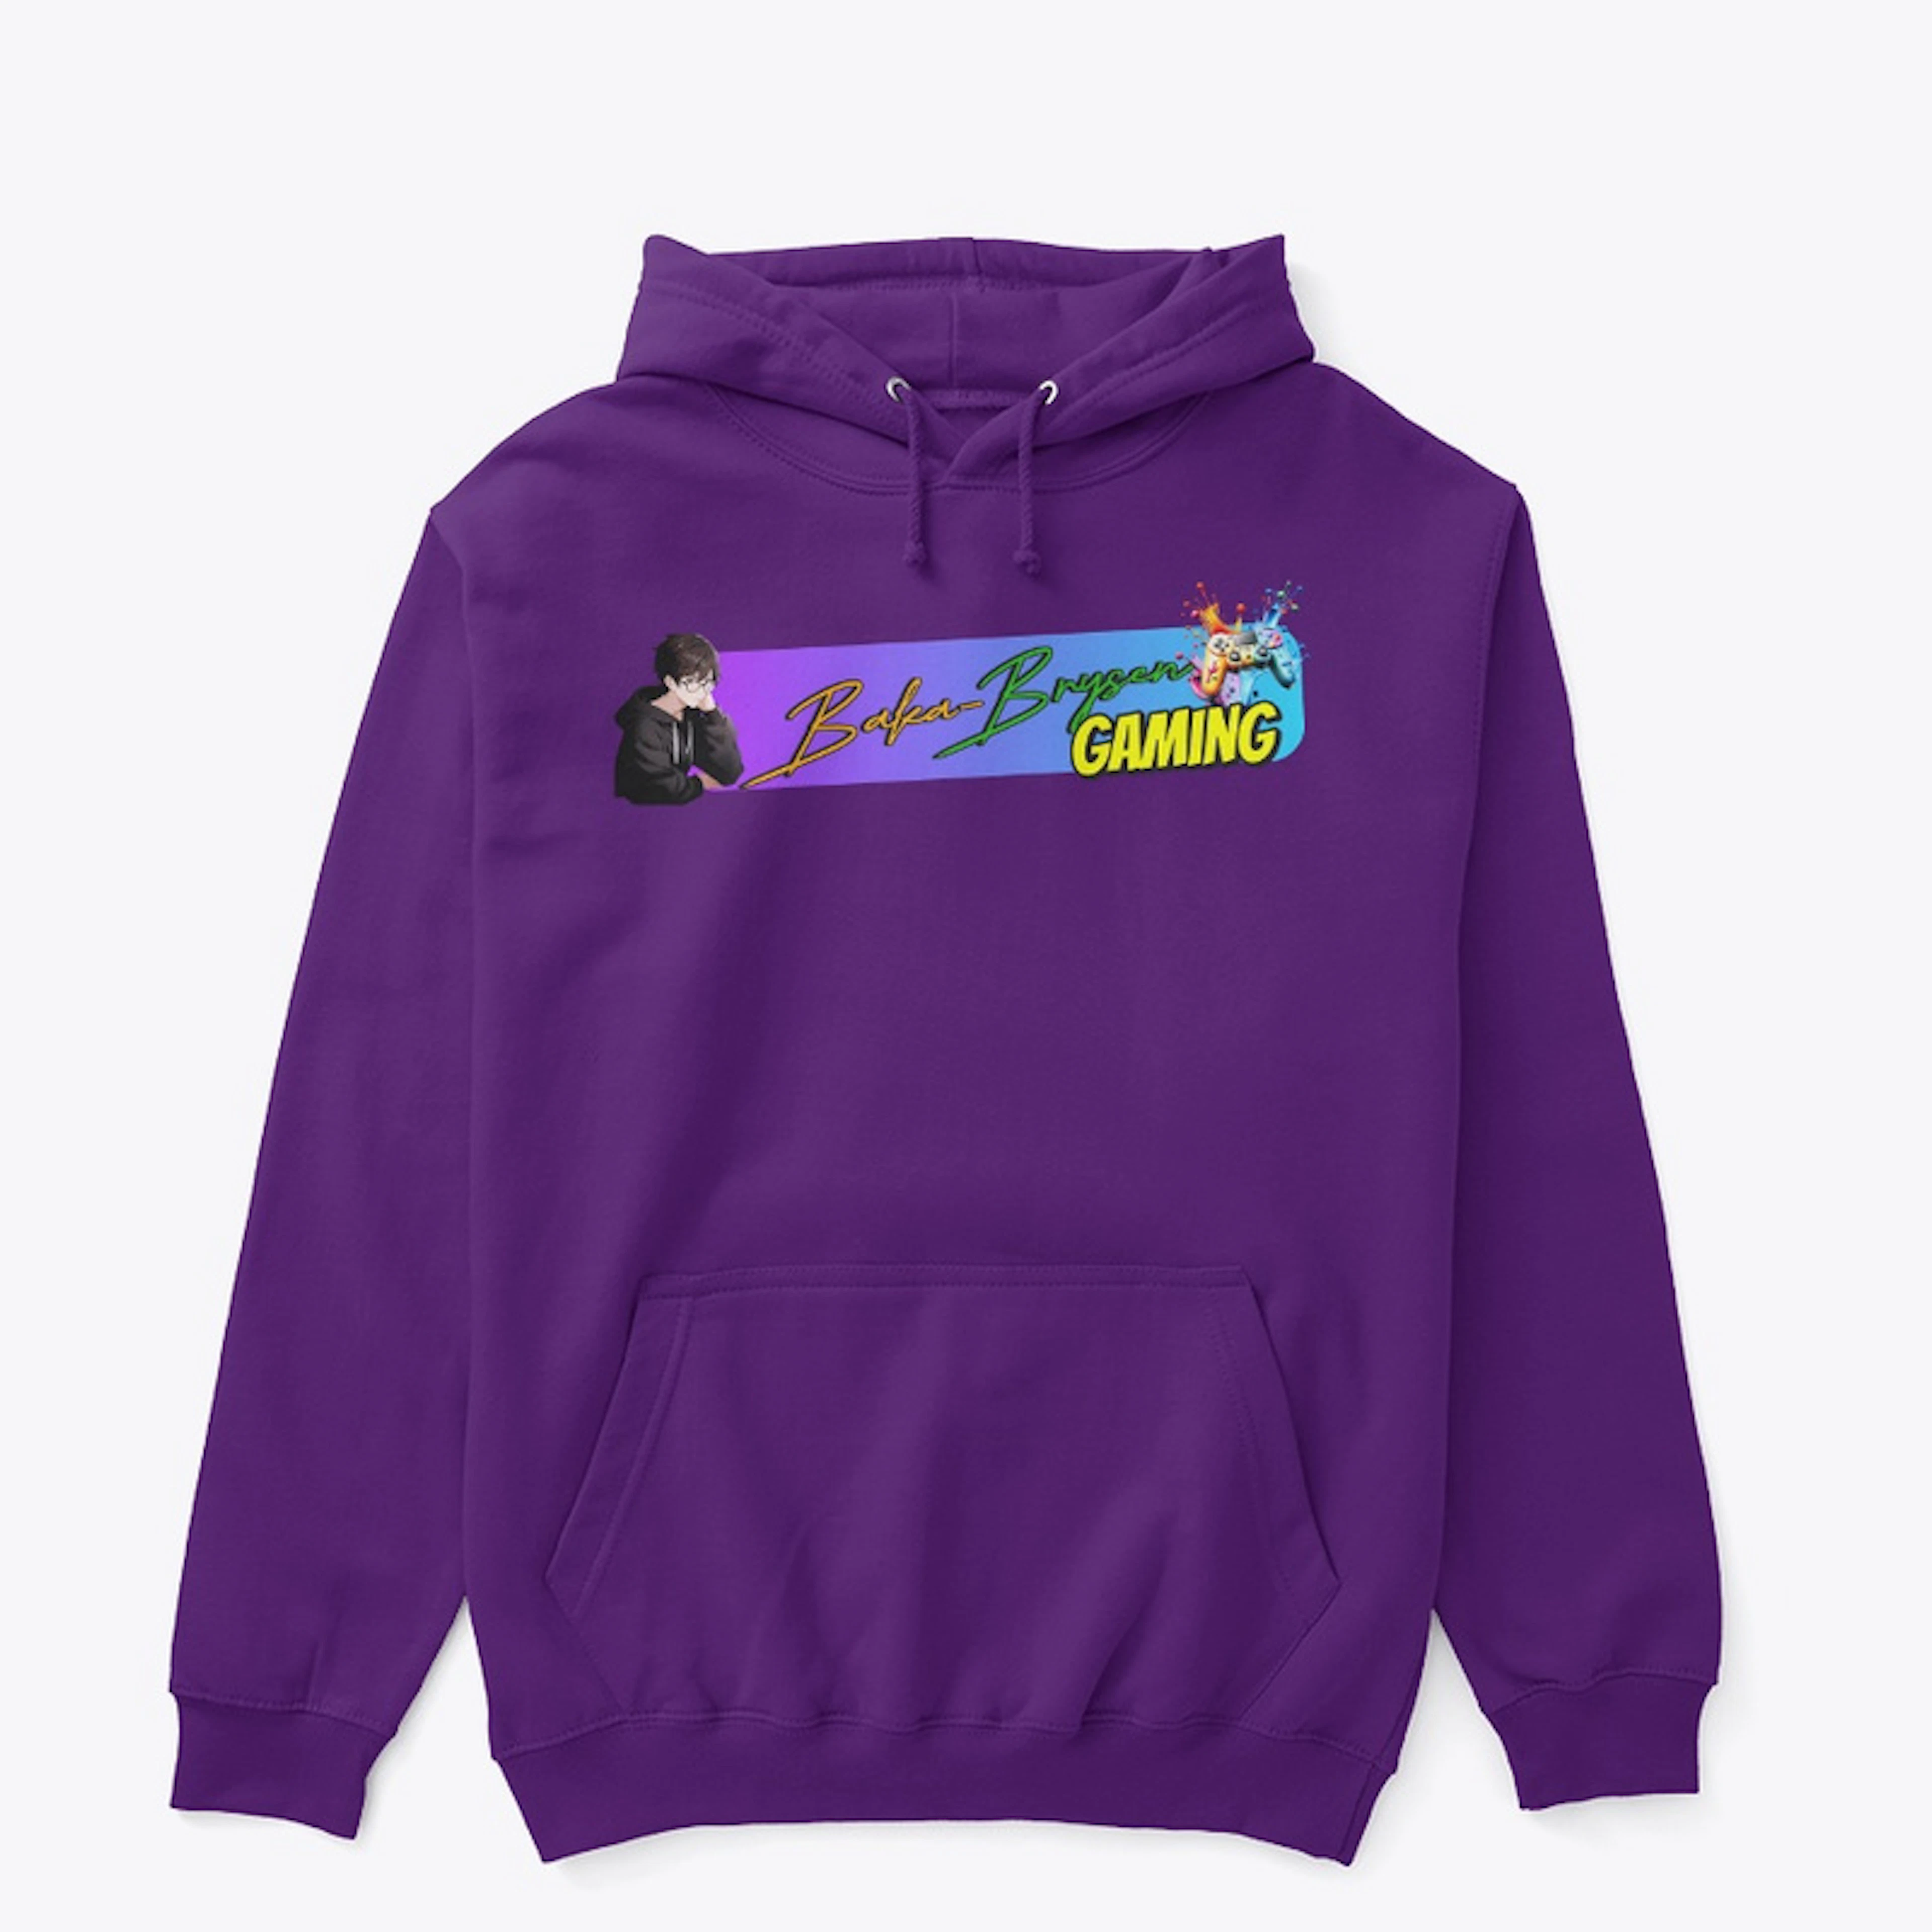 Baka-Brysen Support hoodie